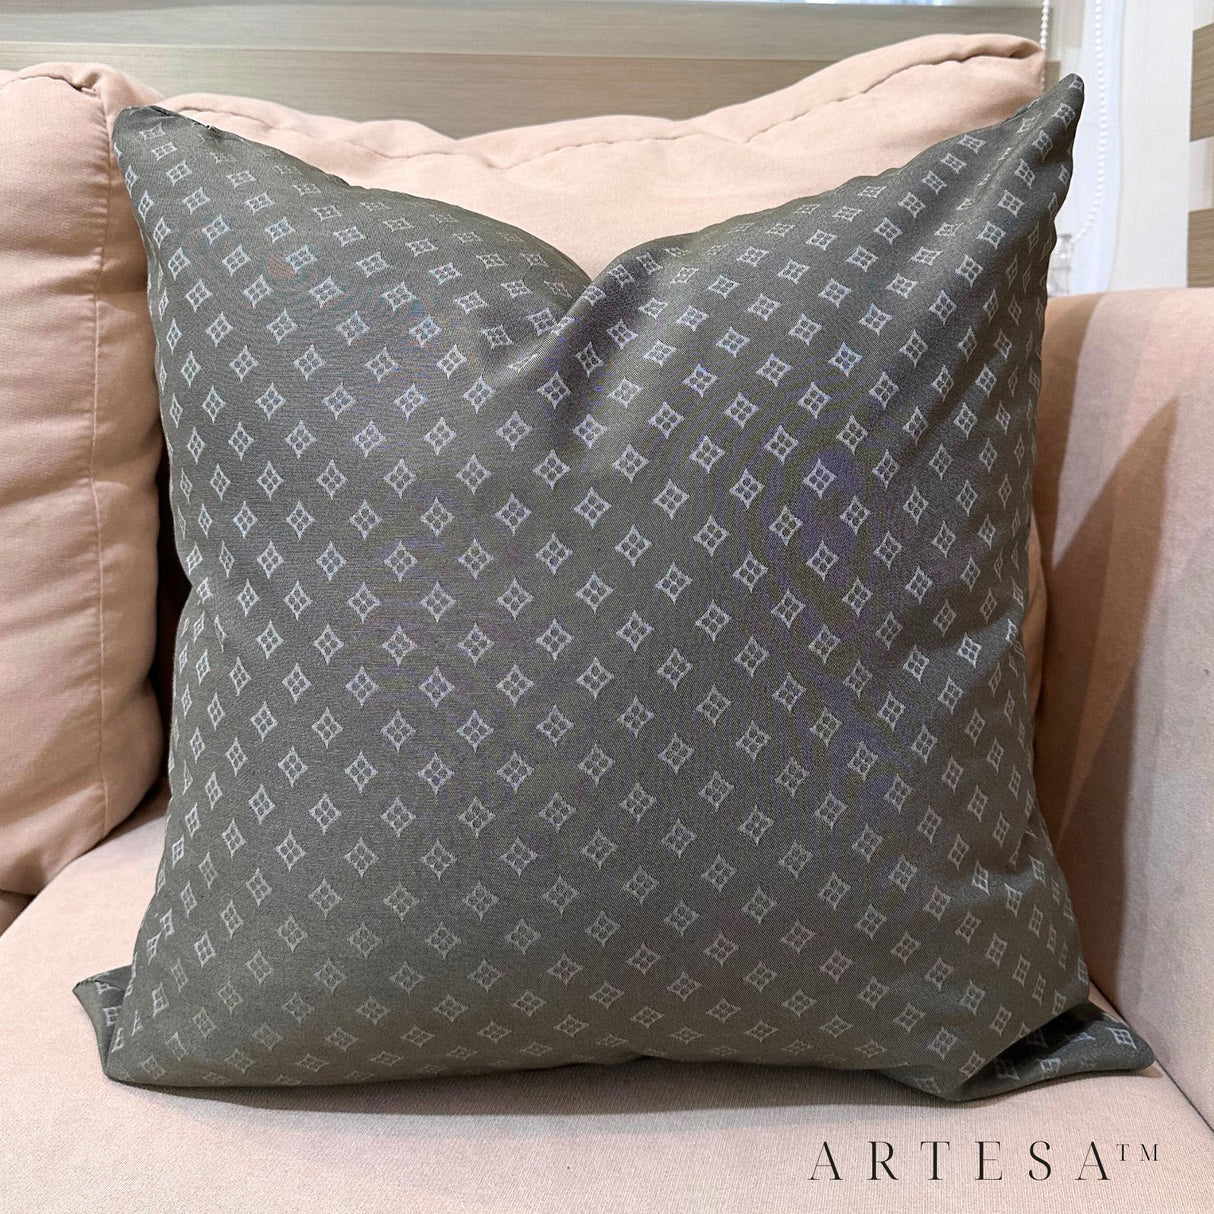 Artesa Carmen Premium Cotton Brocade Throw Pillow Cover with hidden zipper closure - Elegant Home Decor Accent